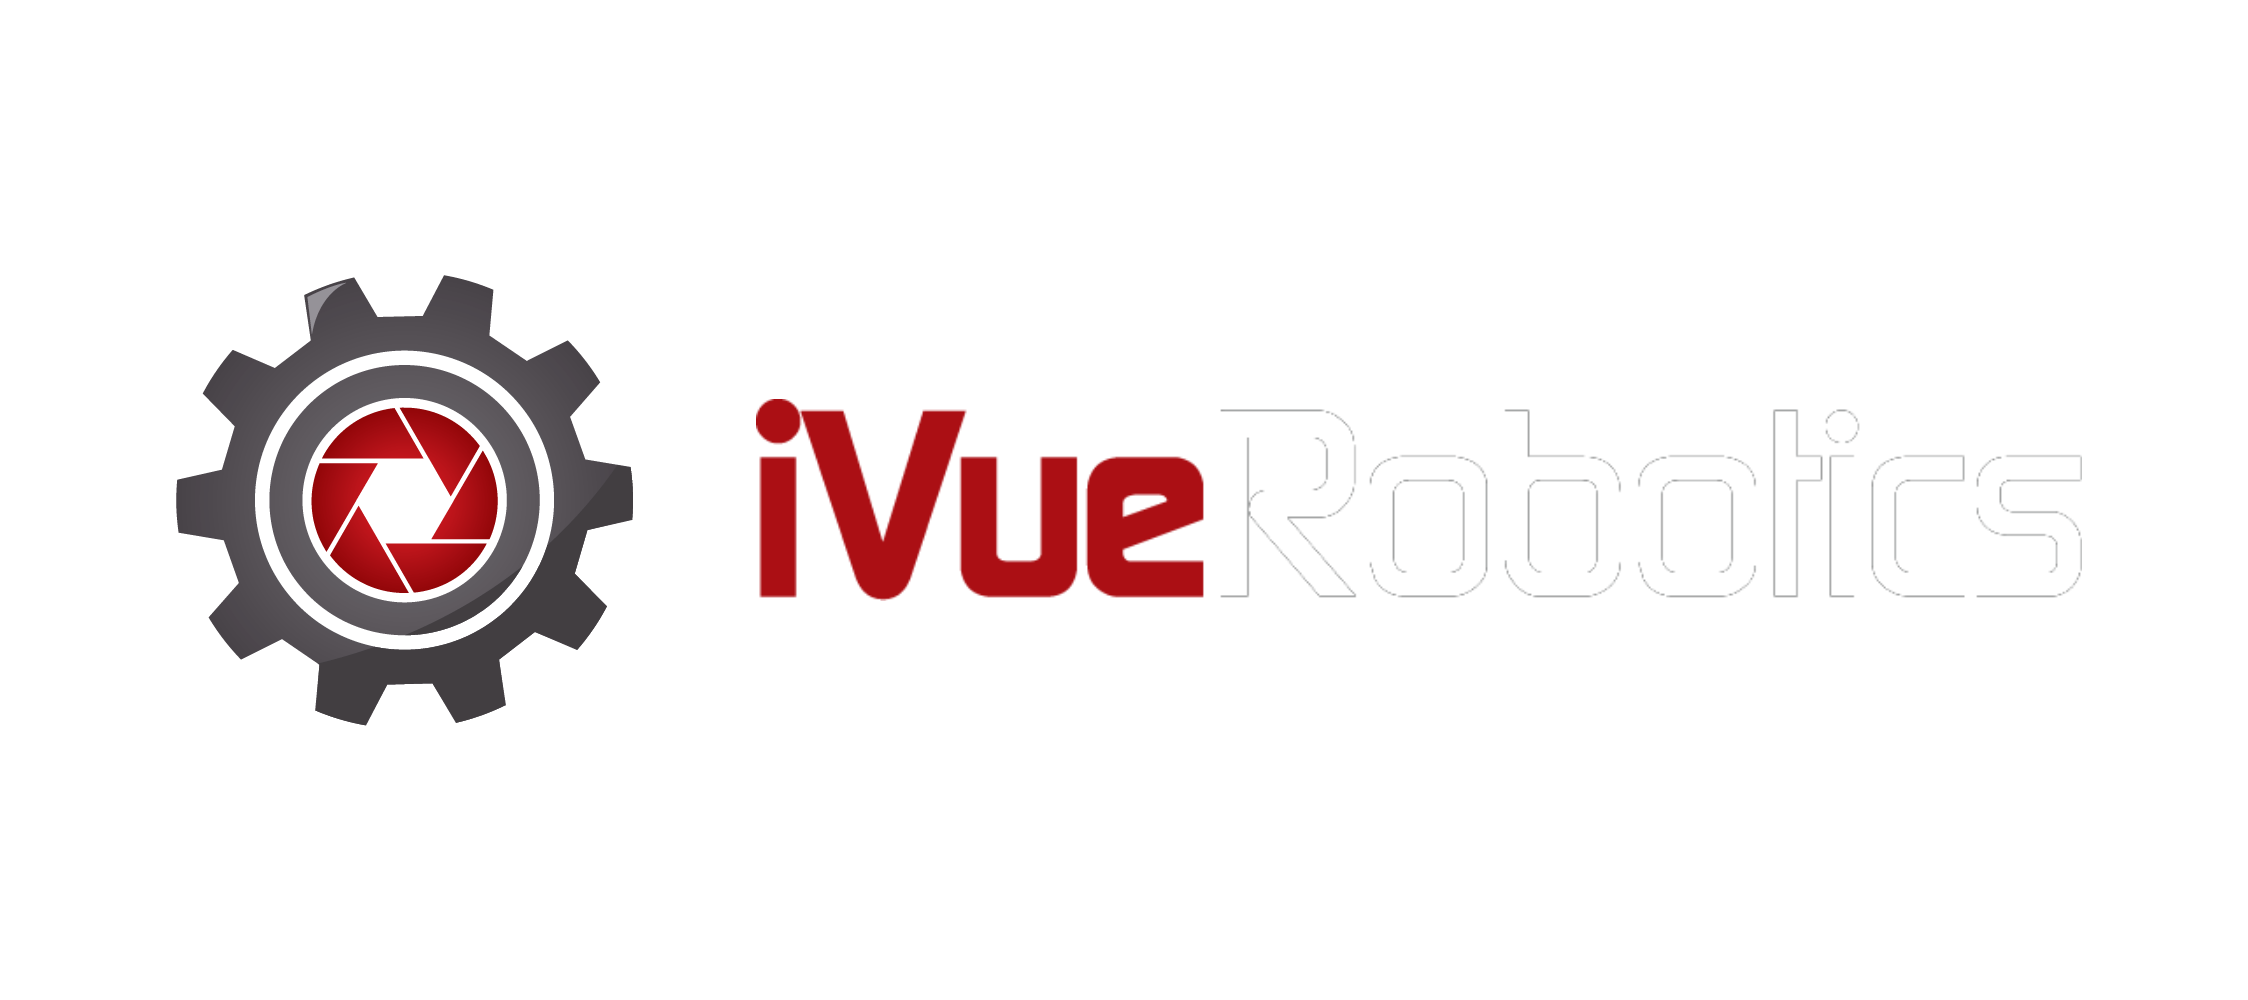 iVue Robotics